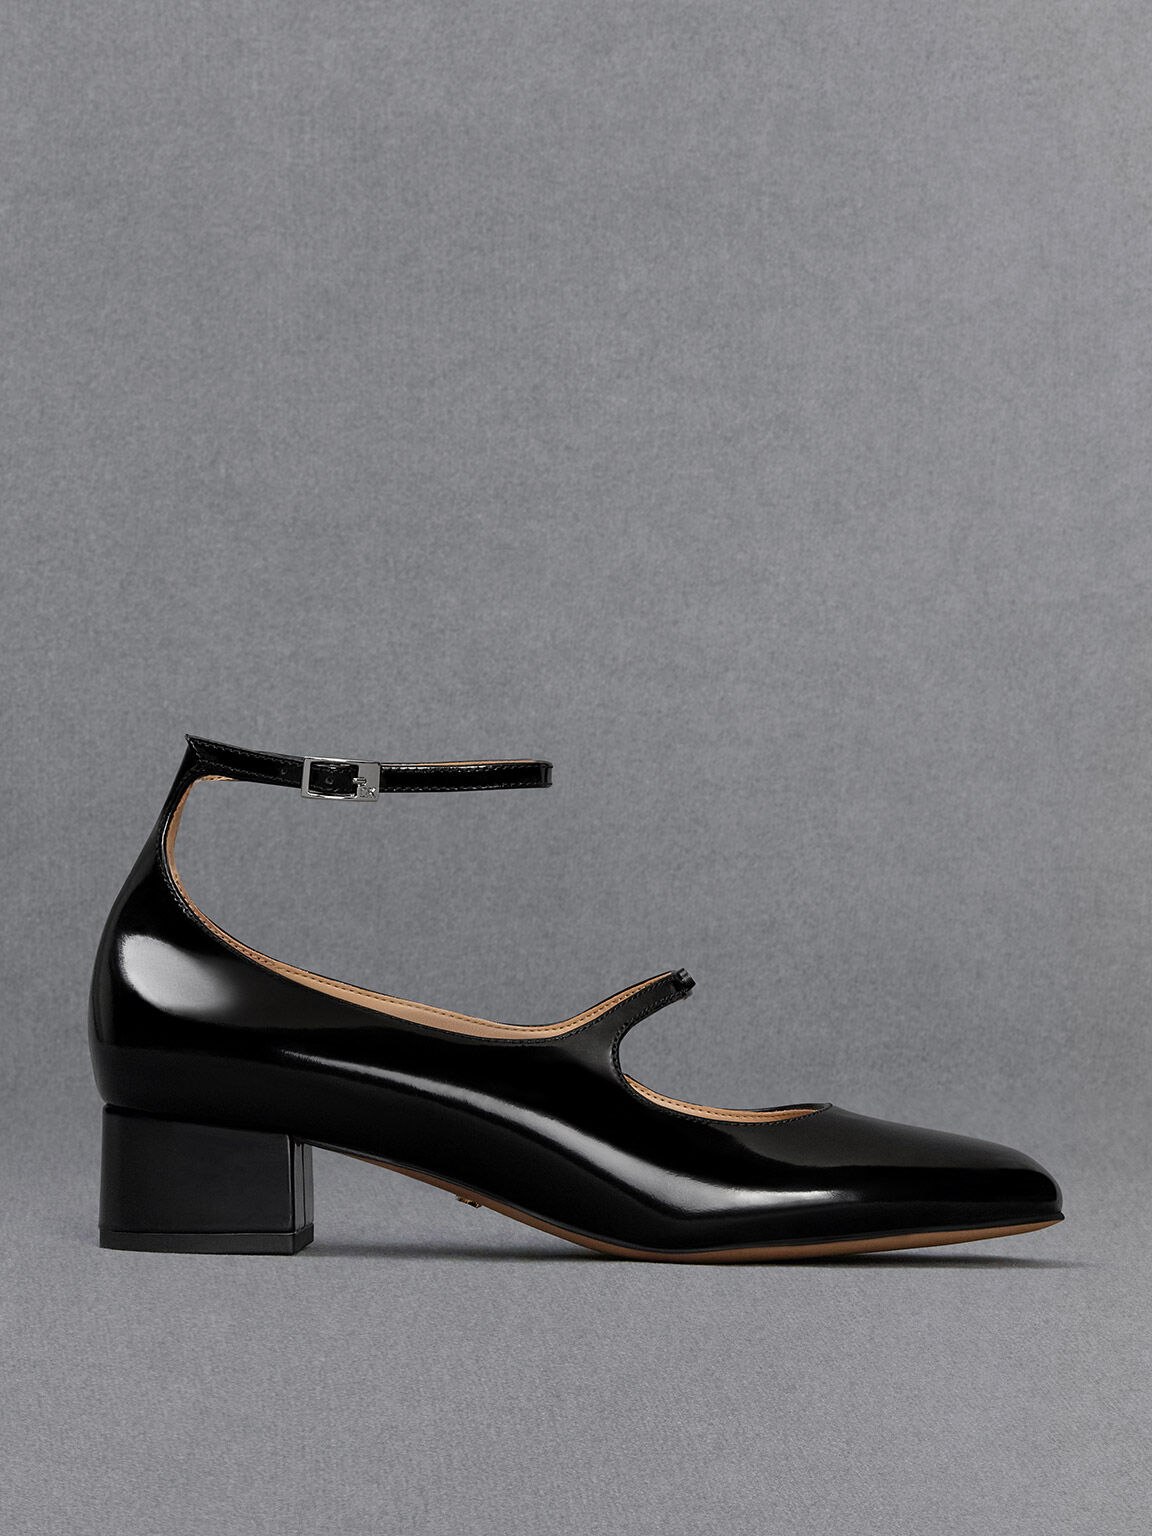 Black mary jane heels | Handmade by Women Artisans | Julia Bo - Julia Bo -  Women's Oxfords